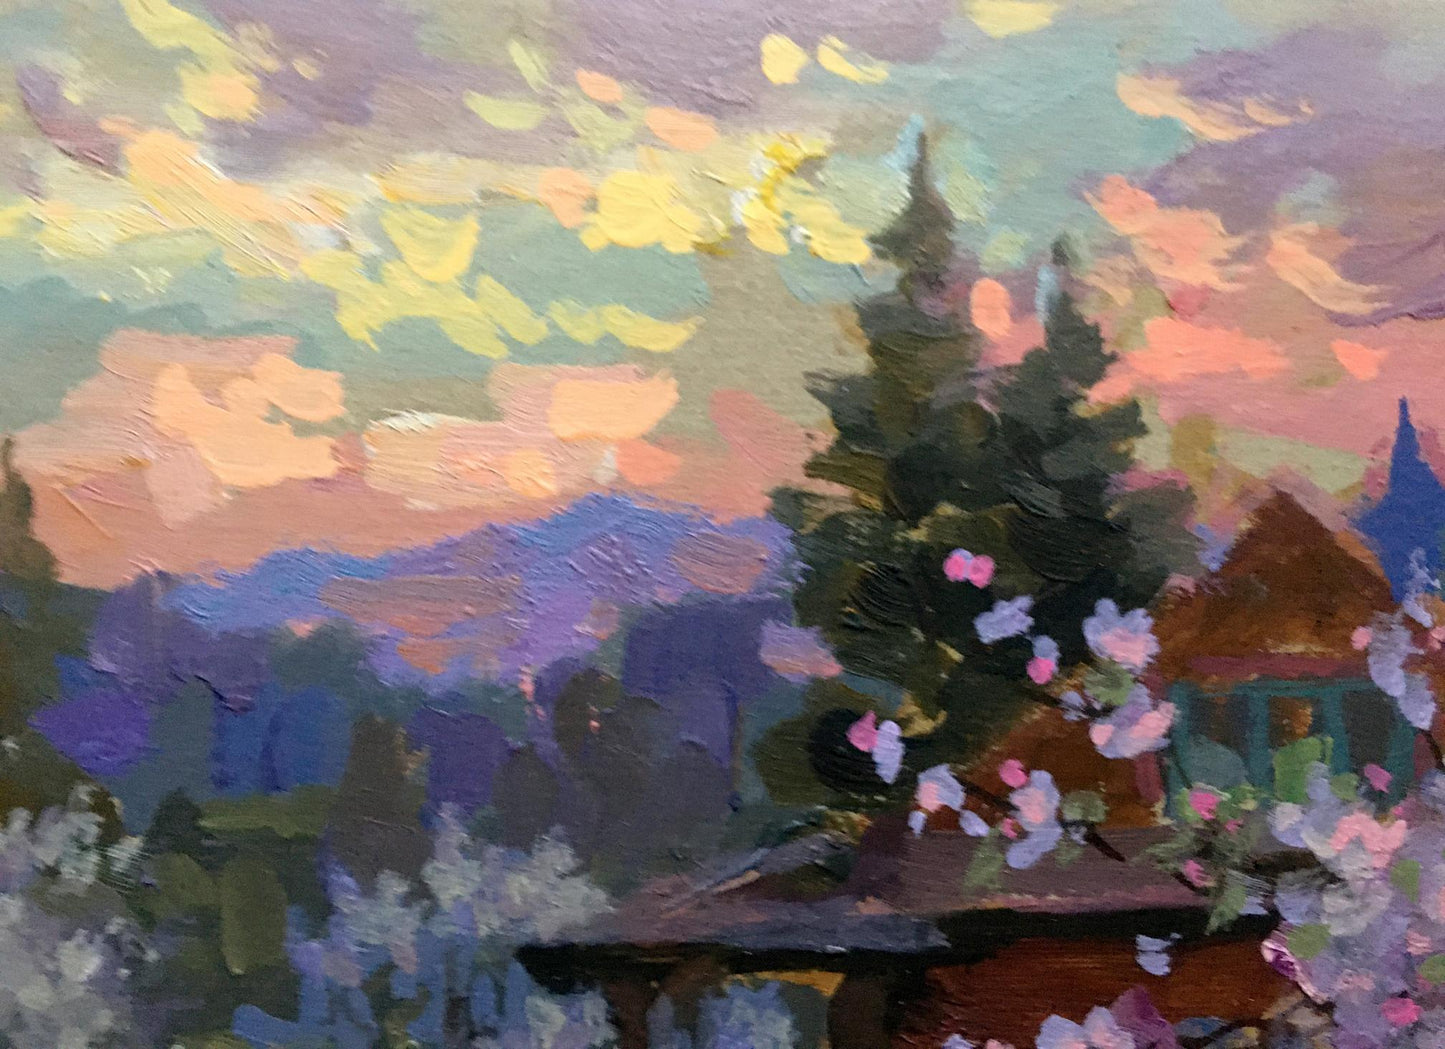 Vladimir Batrakov's "Blooming Garden in the Evening" in oil